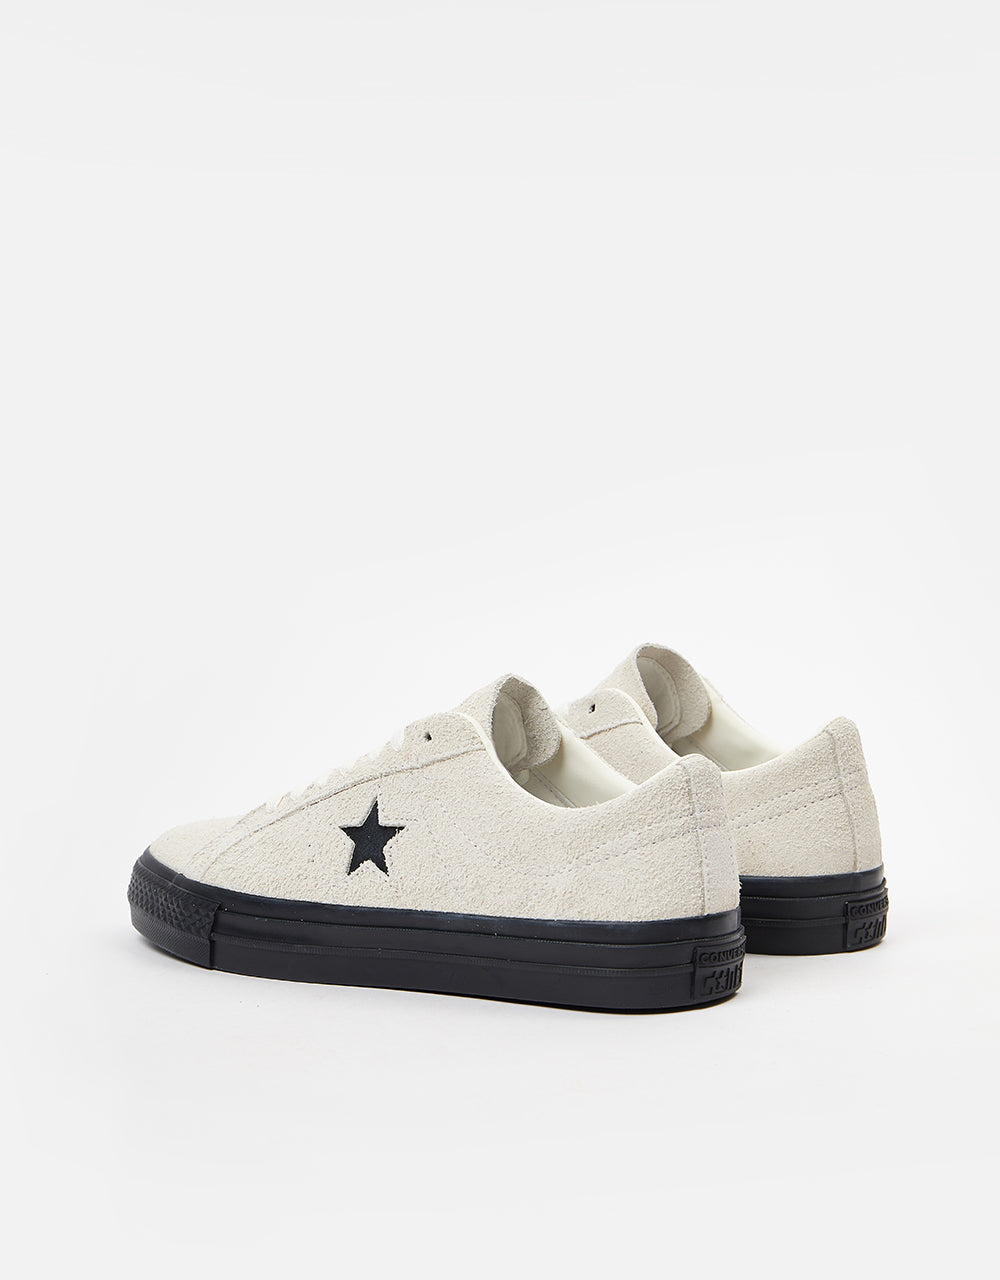 Converse One Star Shaggy Suede Skate Shoes - Egret/Egret/Black